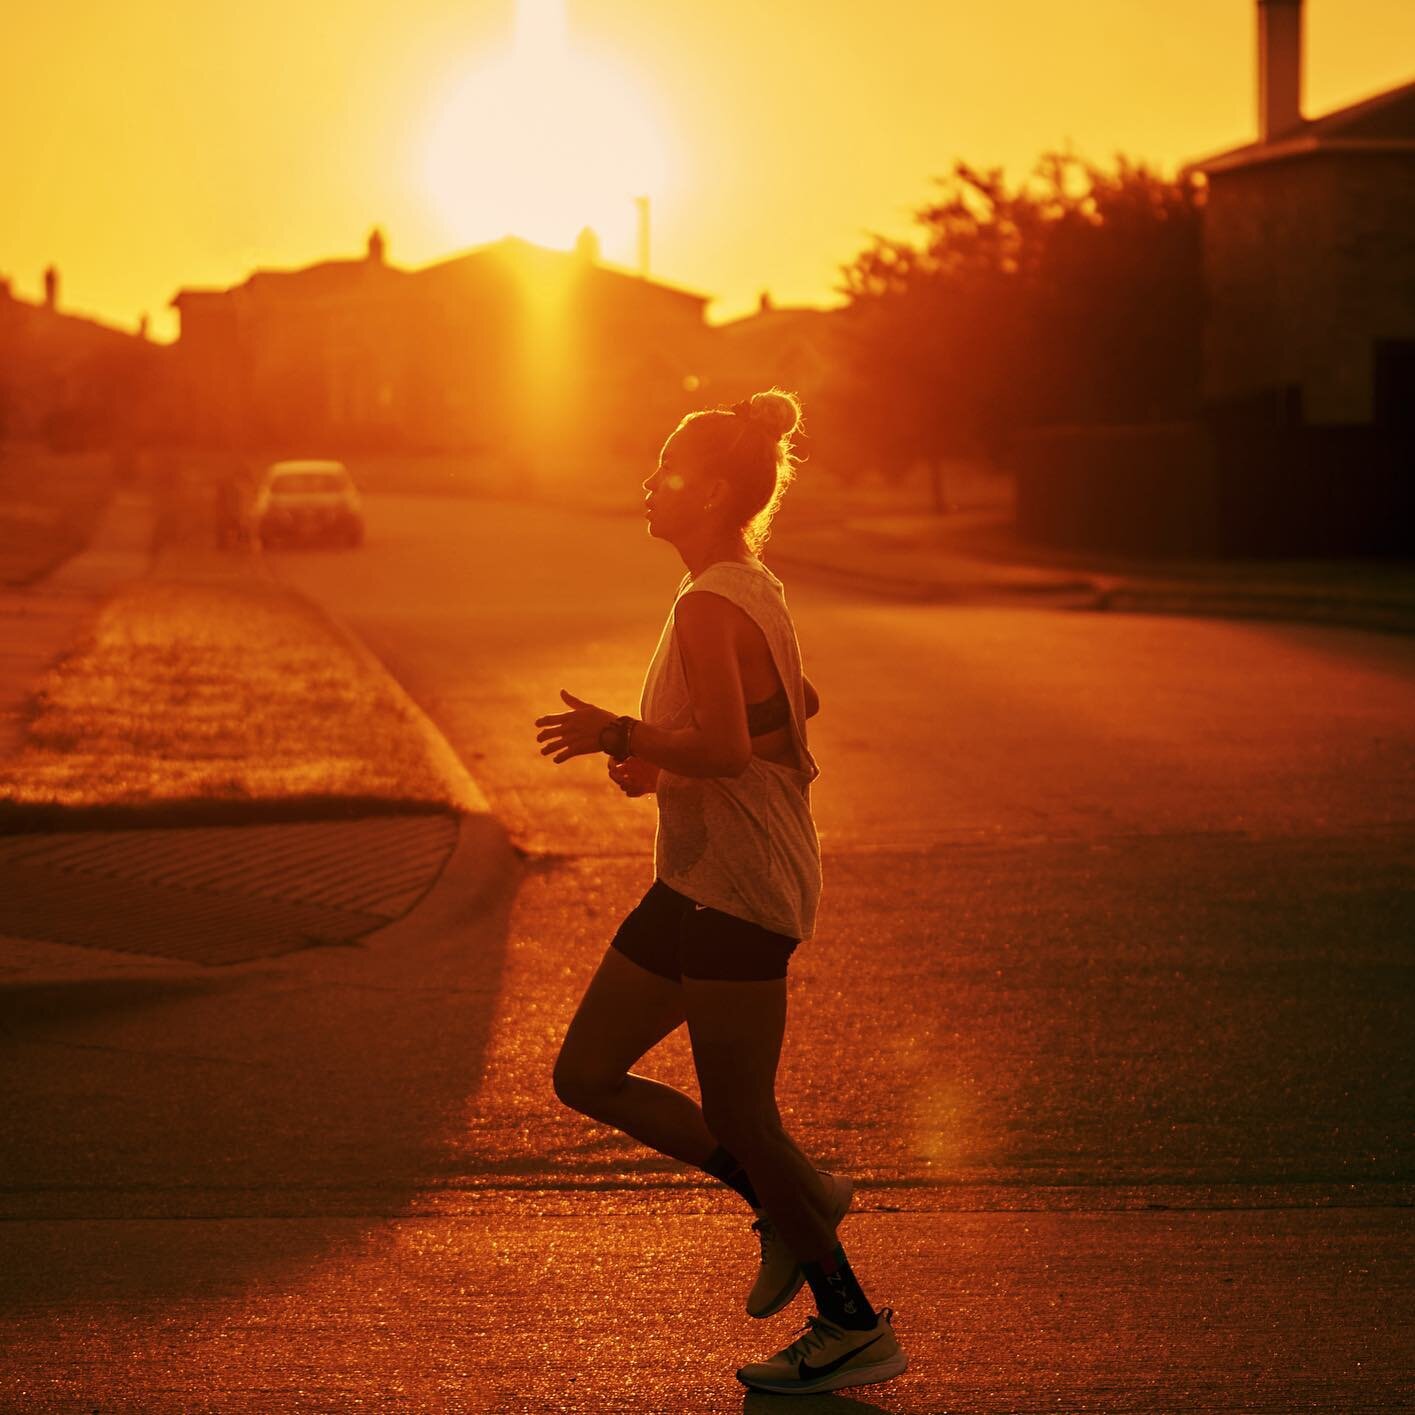 Good Morning! Best thing about morning shoots are the sunrises 🌅 

Event: @thespeedproject 
Runner: @carolabrunning 

#52visuals #tspdiy #morningruns #solsistersrun #sportsphotography #sunrises #dfwphotographer #dfwvideographer